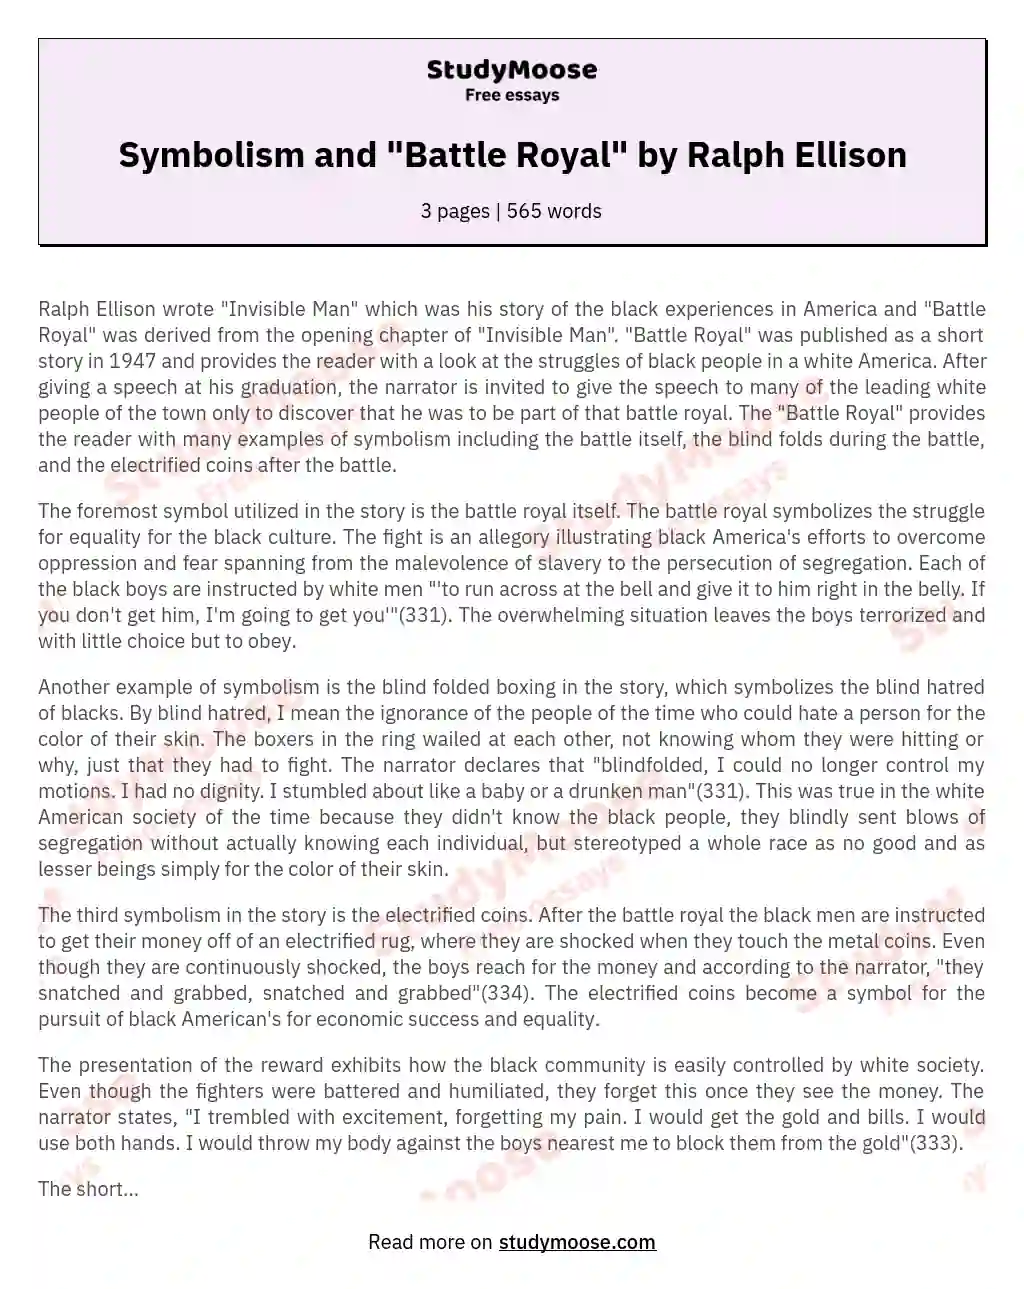 Symbolism and "Battle Royal" by Ralph Ellison essay